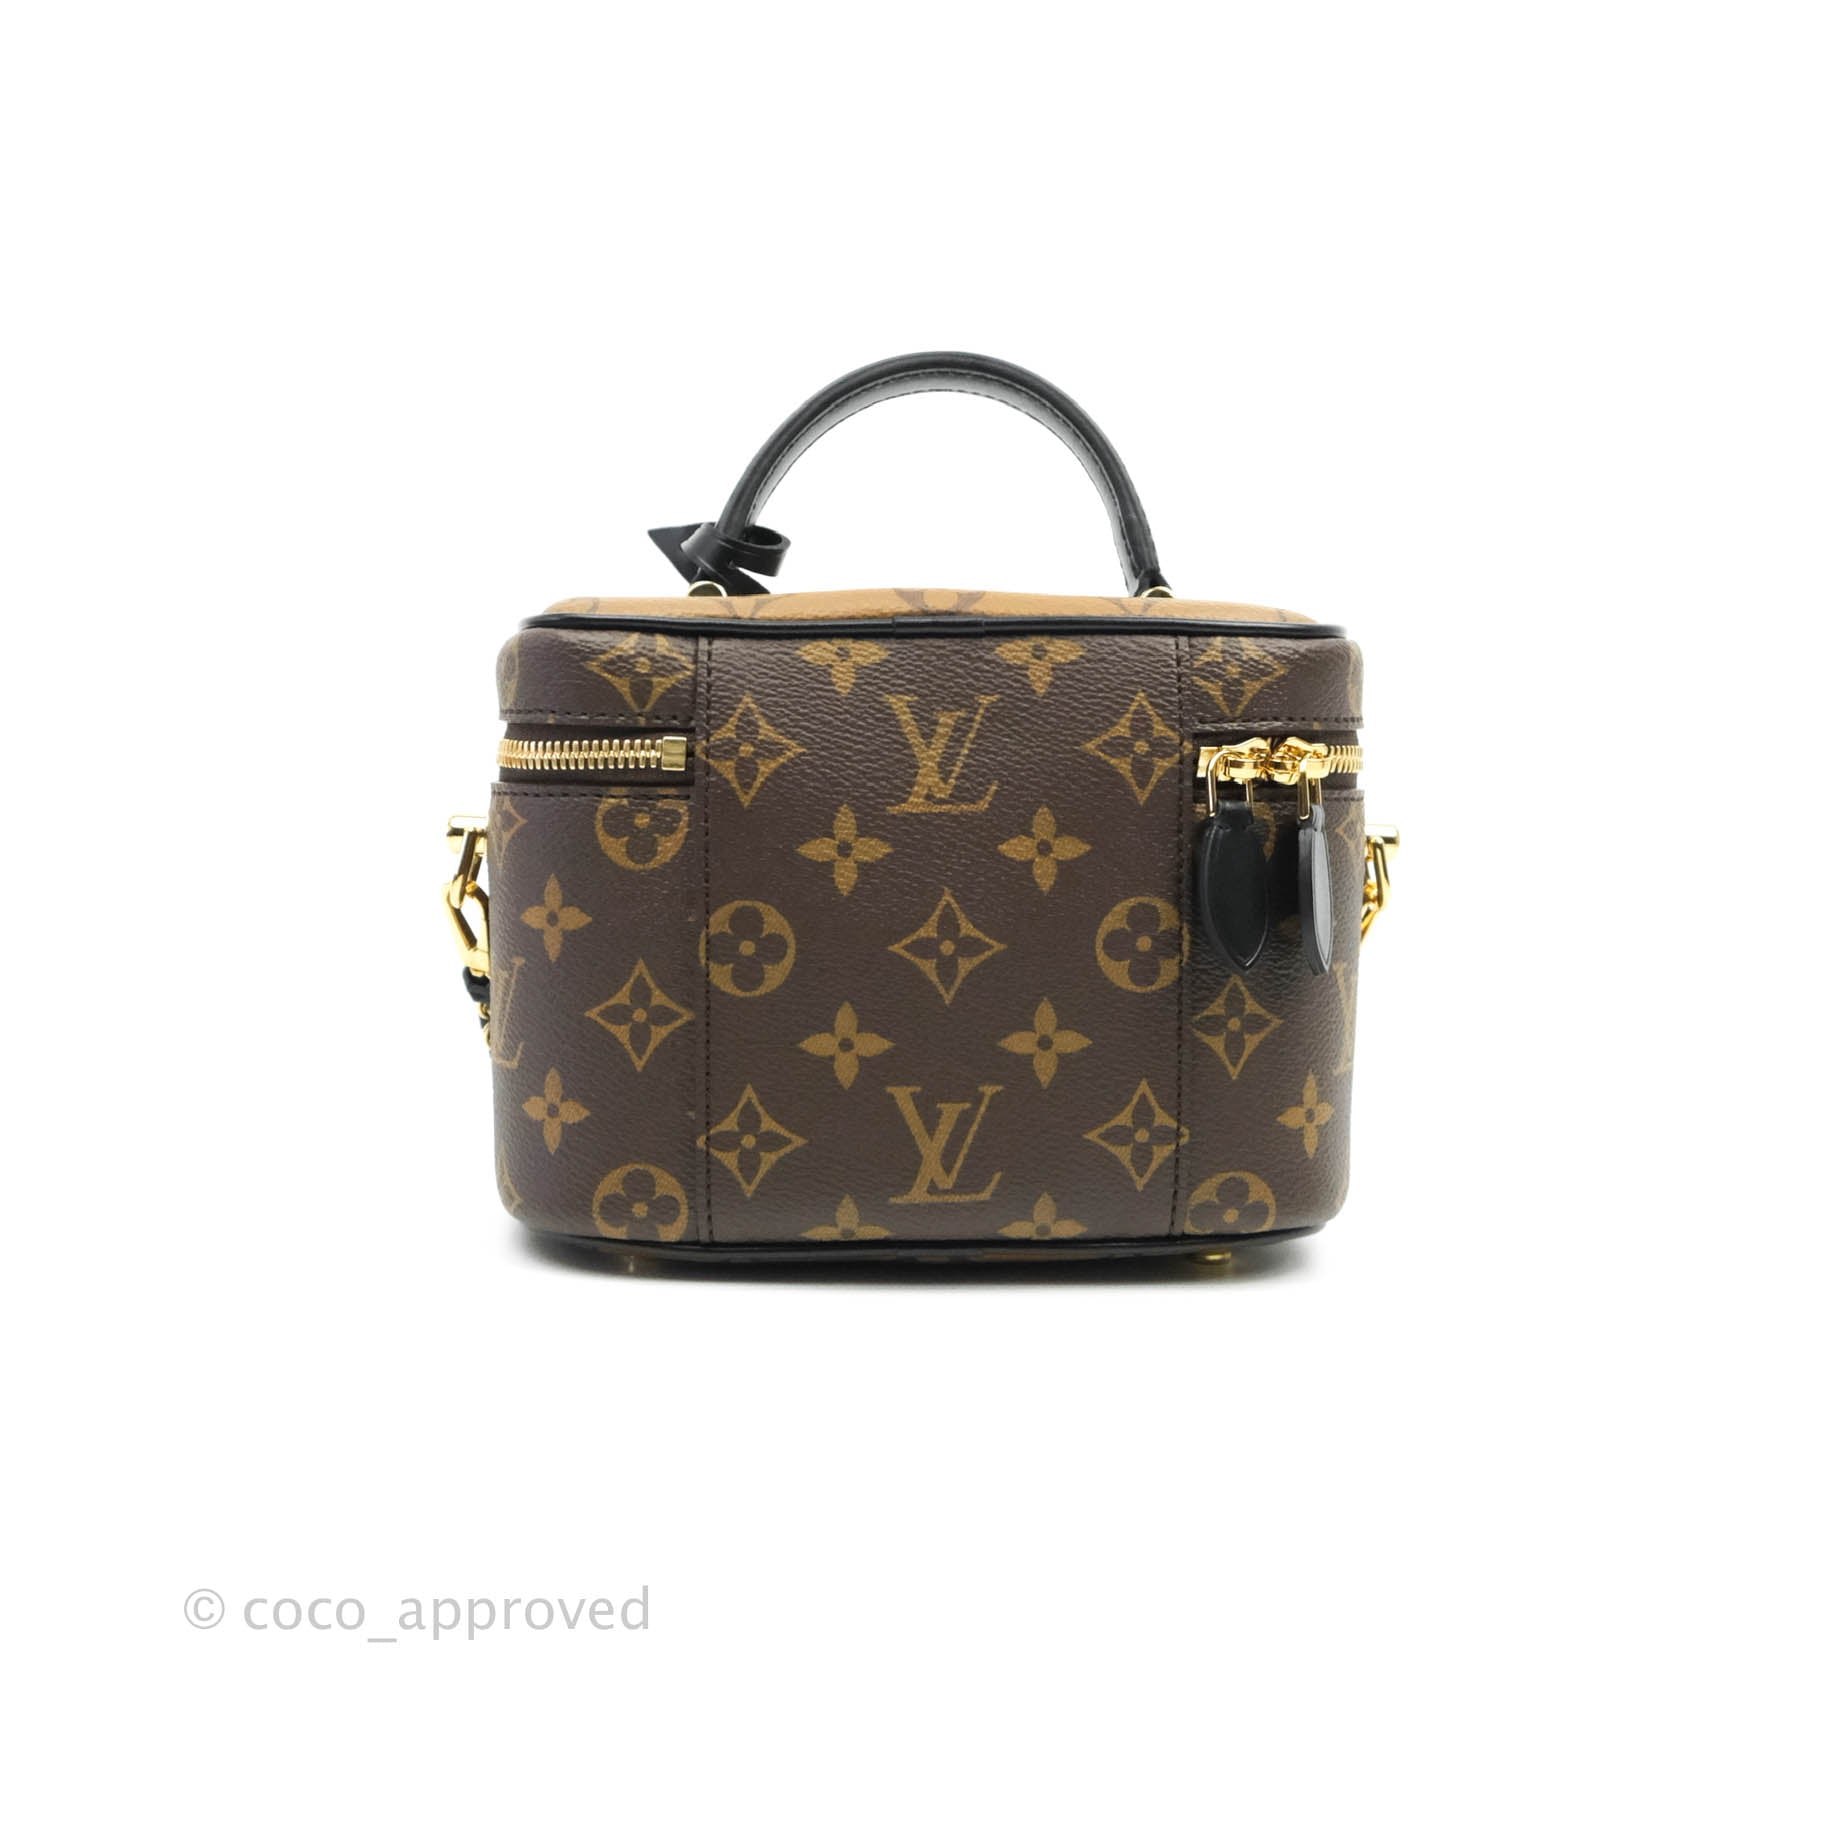 Louis Vuitton Vanity Handbag Limited Edition Since 1854 Monogram